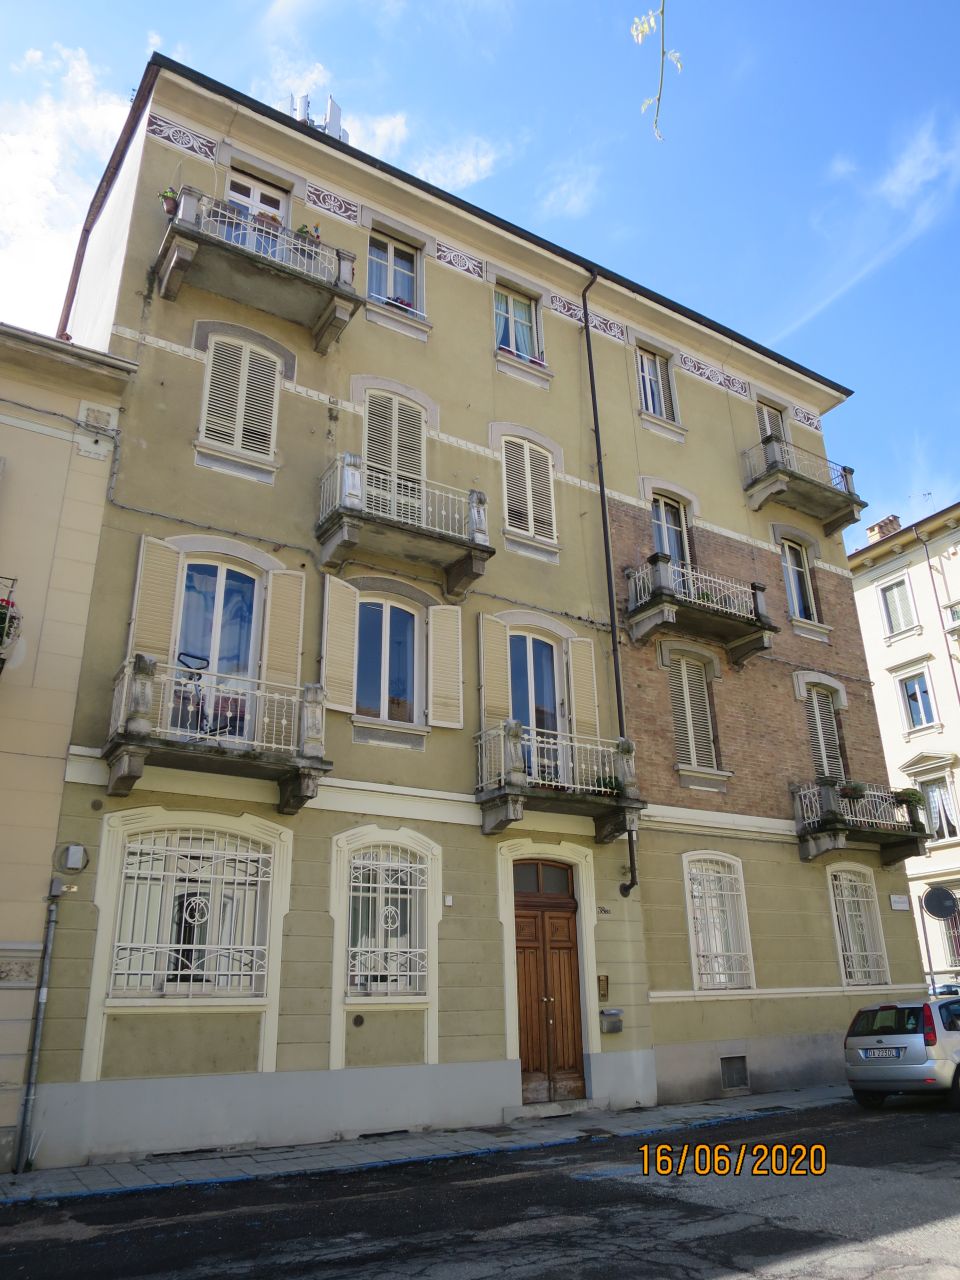 [Casa privata in via Moncalvo, 38 bis] (casa) - Torino (TO) 